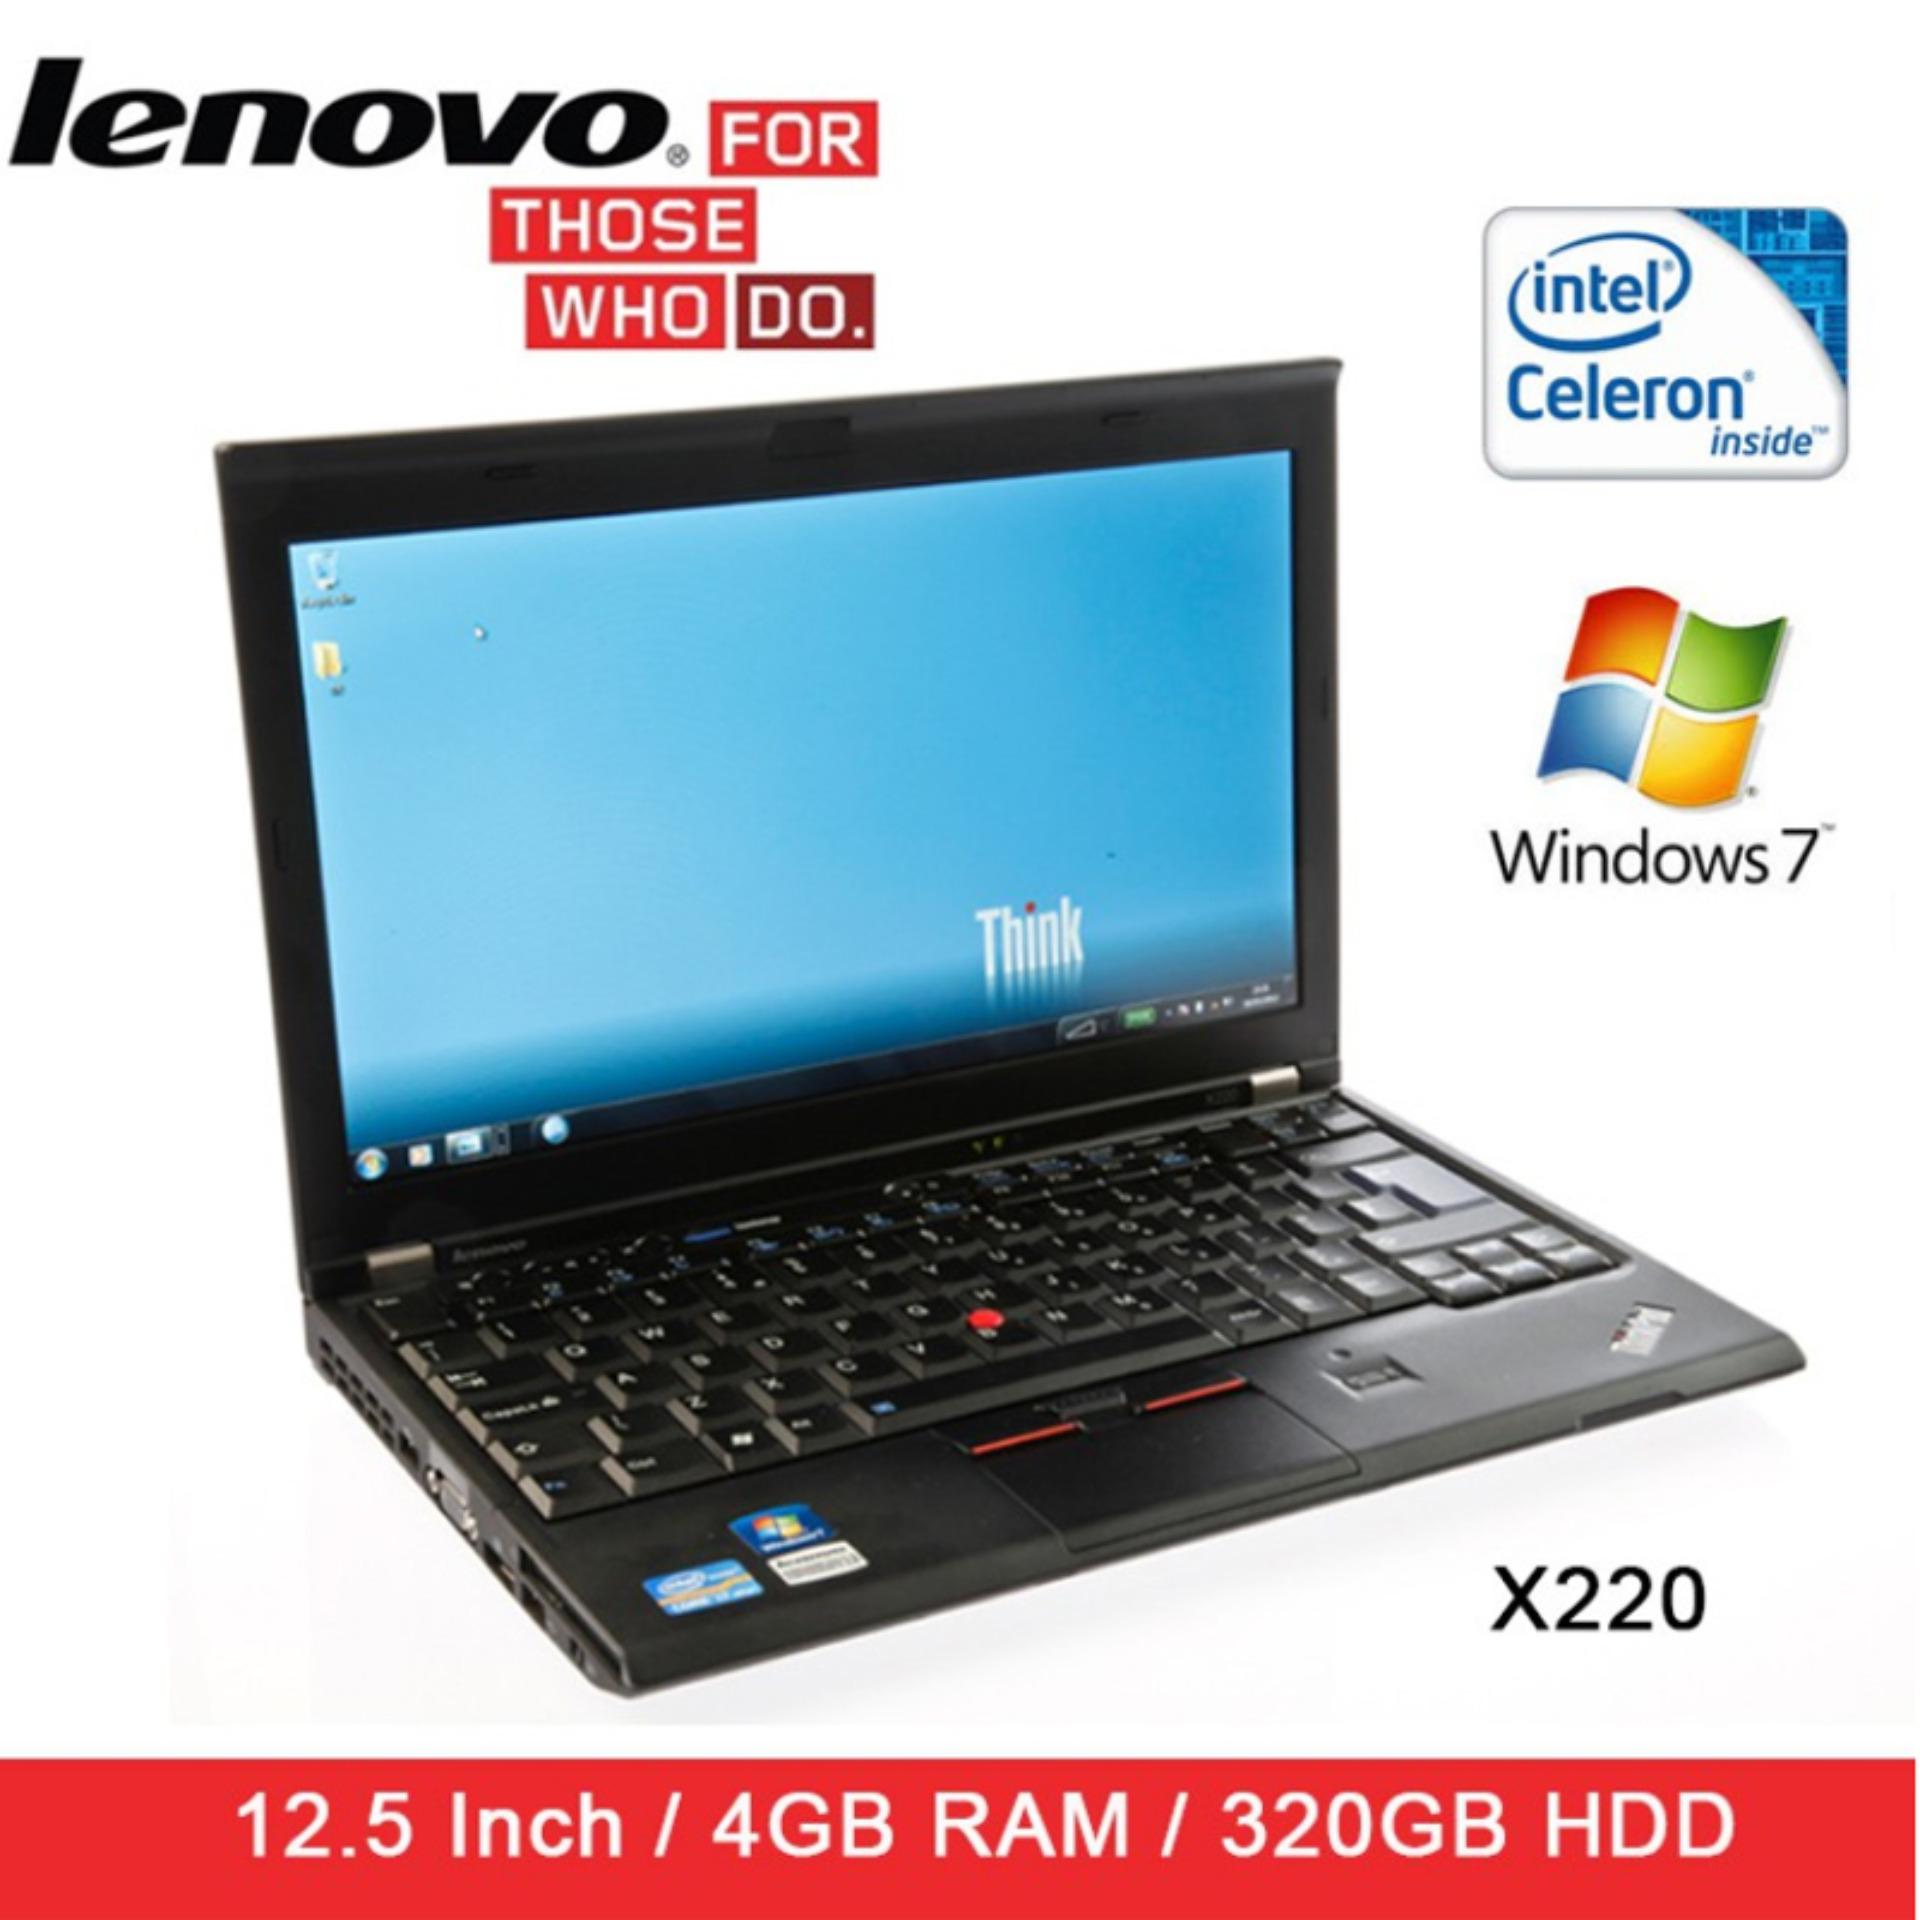 Refurbished Lenovo X220 Laptop / Celeron / 4GB RAM / 320GB HDD / Window 7 / 1mth Warranty